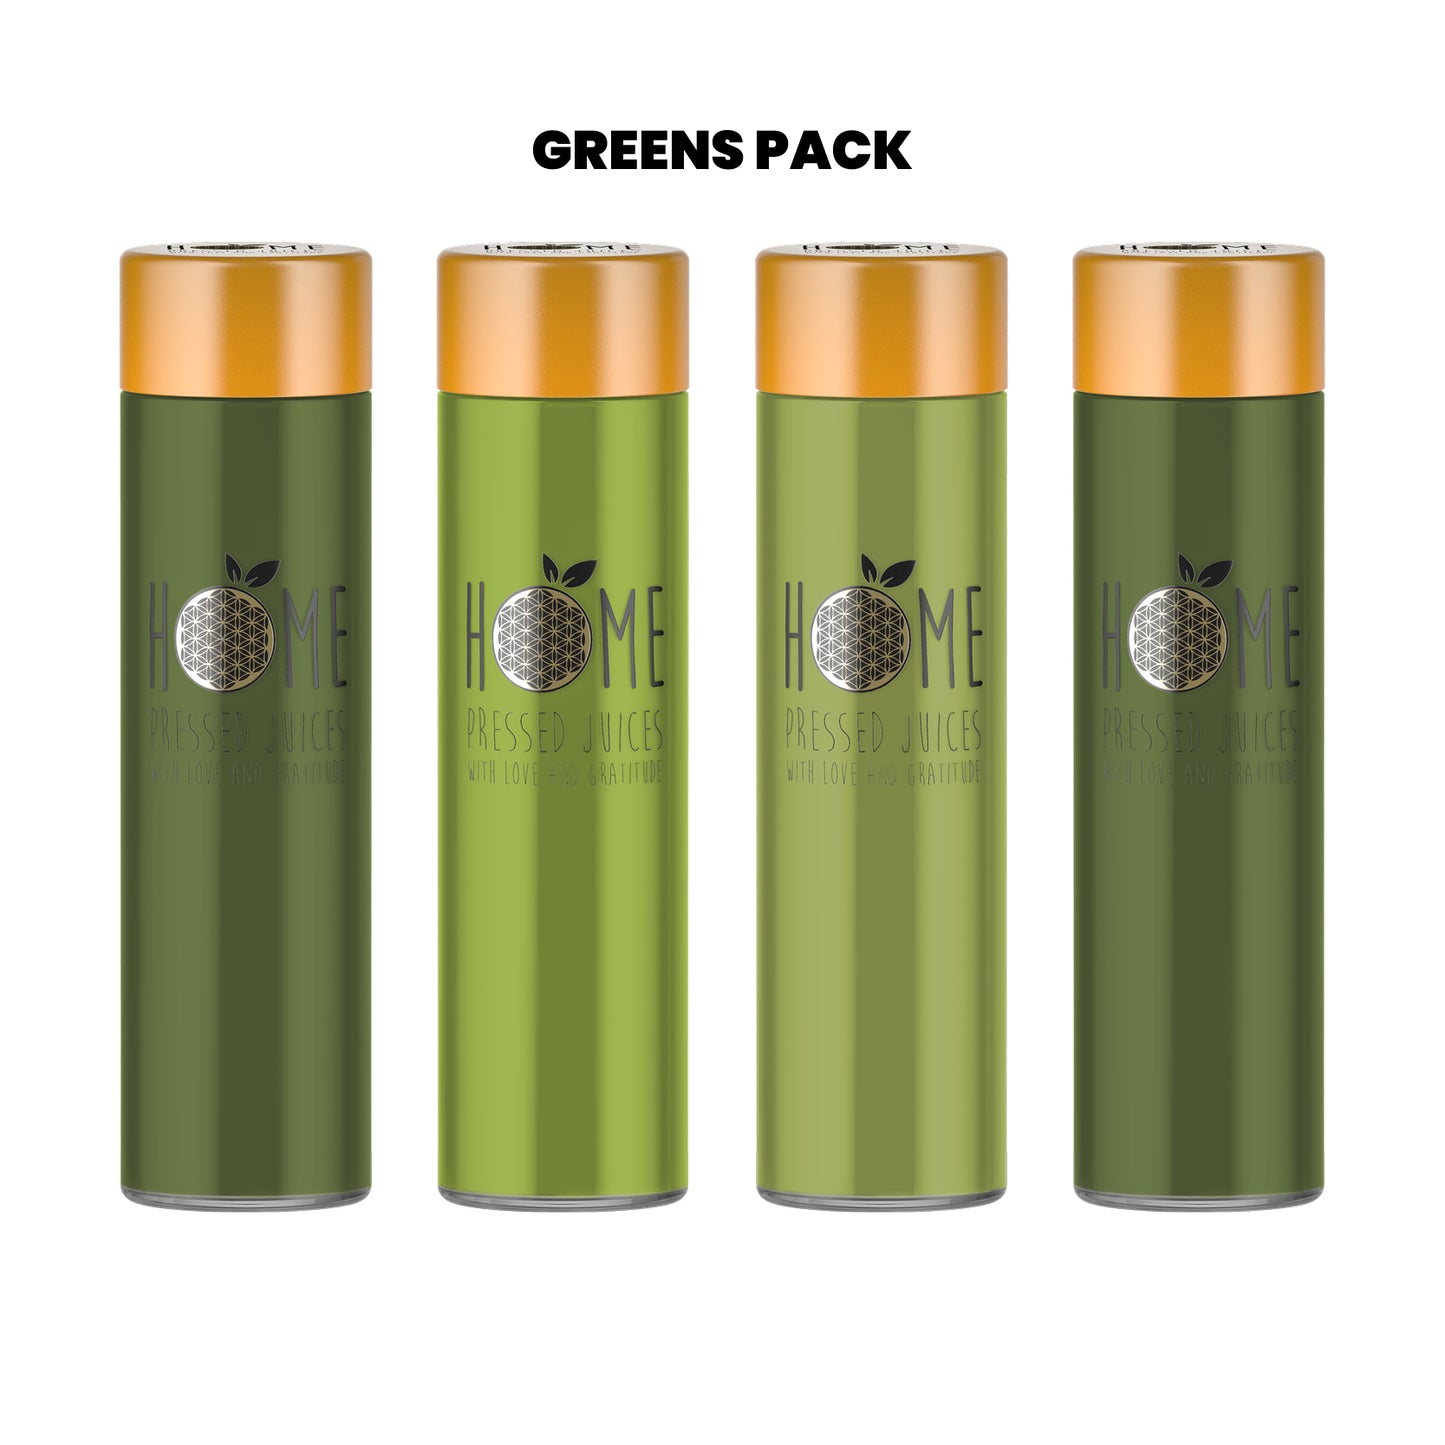 Greens Pack - Home Juice